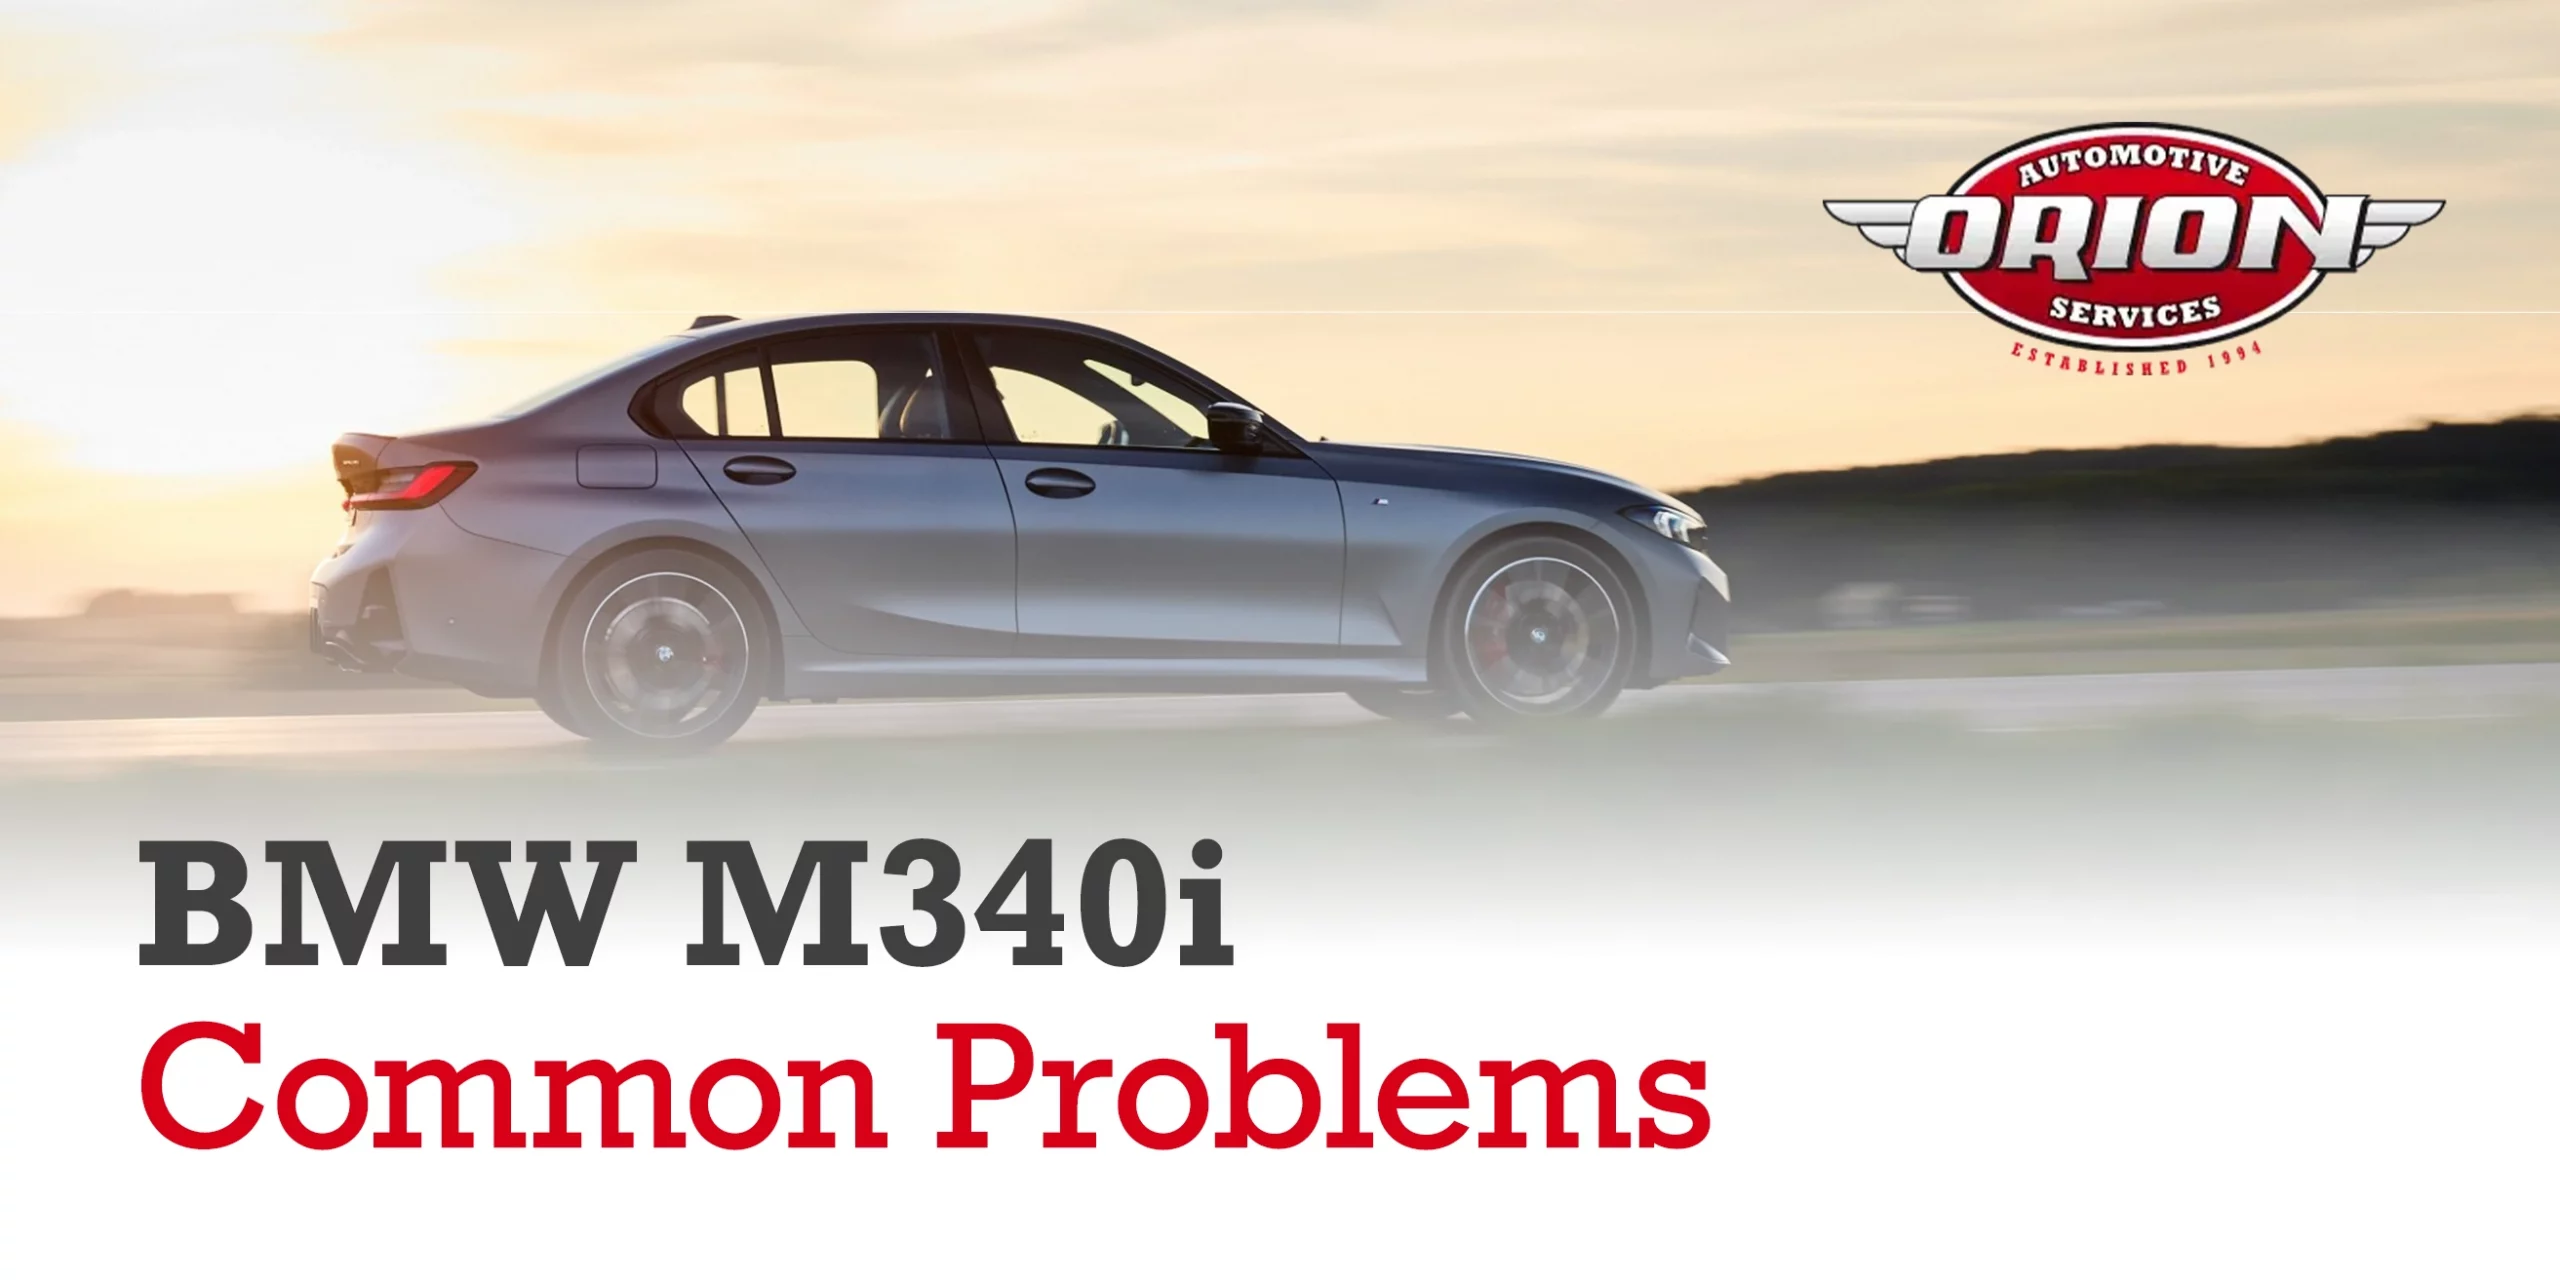 BMW M340i Common Problems